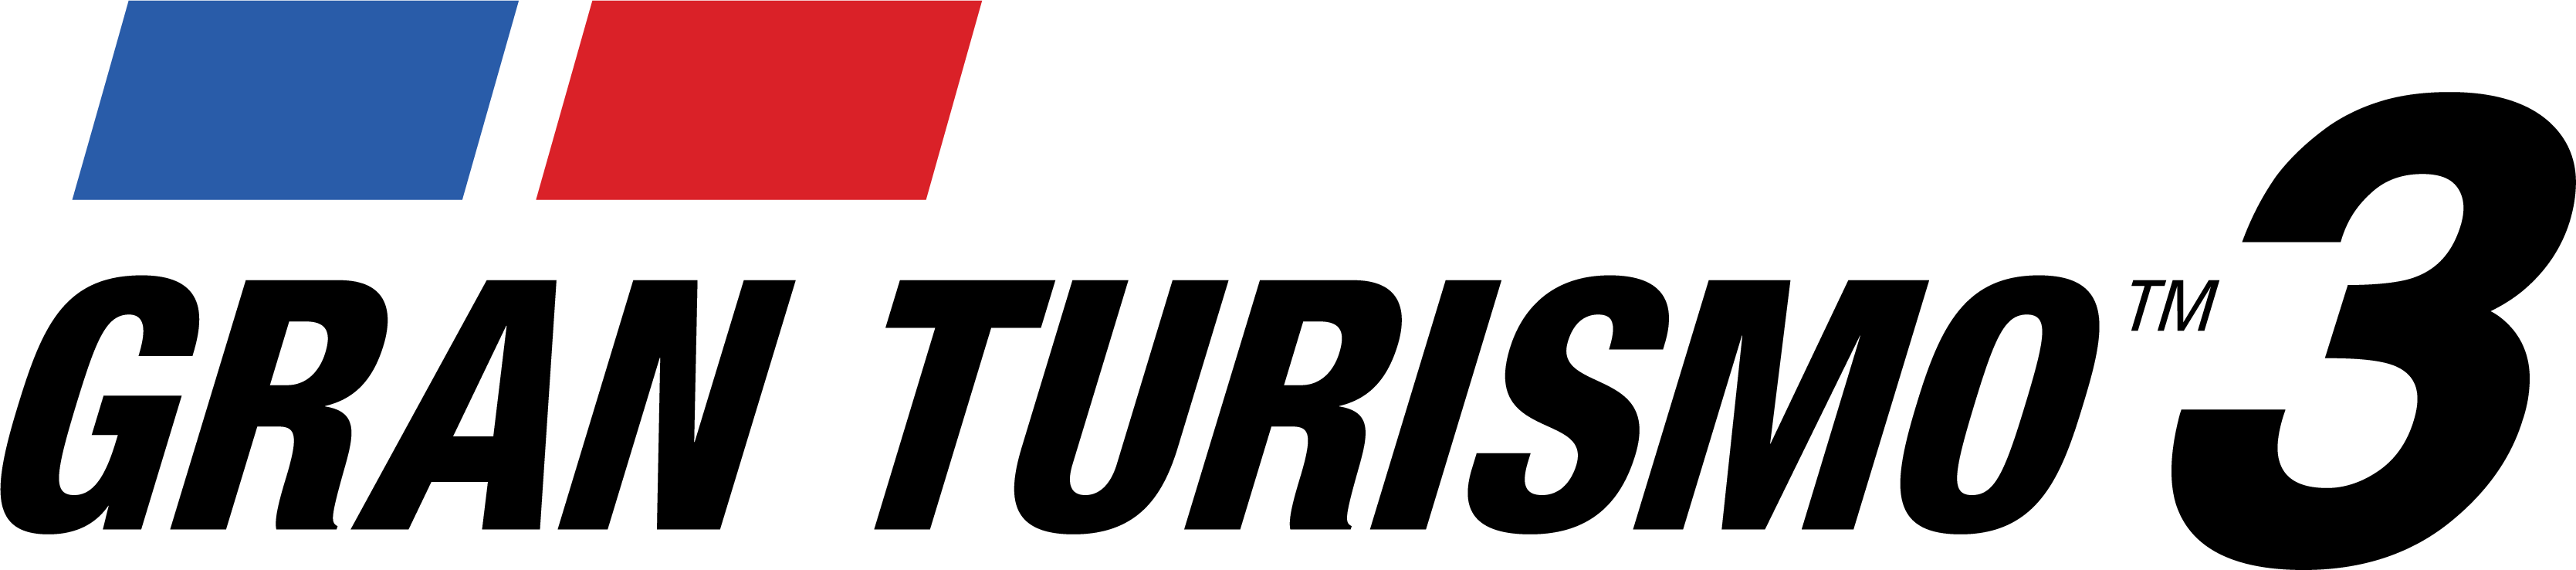 Gran Turismo Logo PNG HD Images